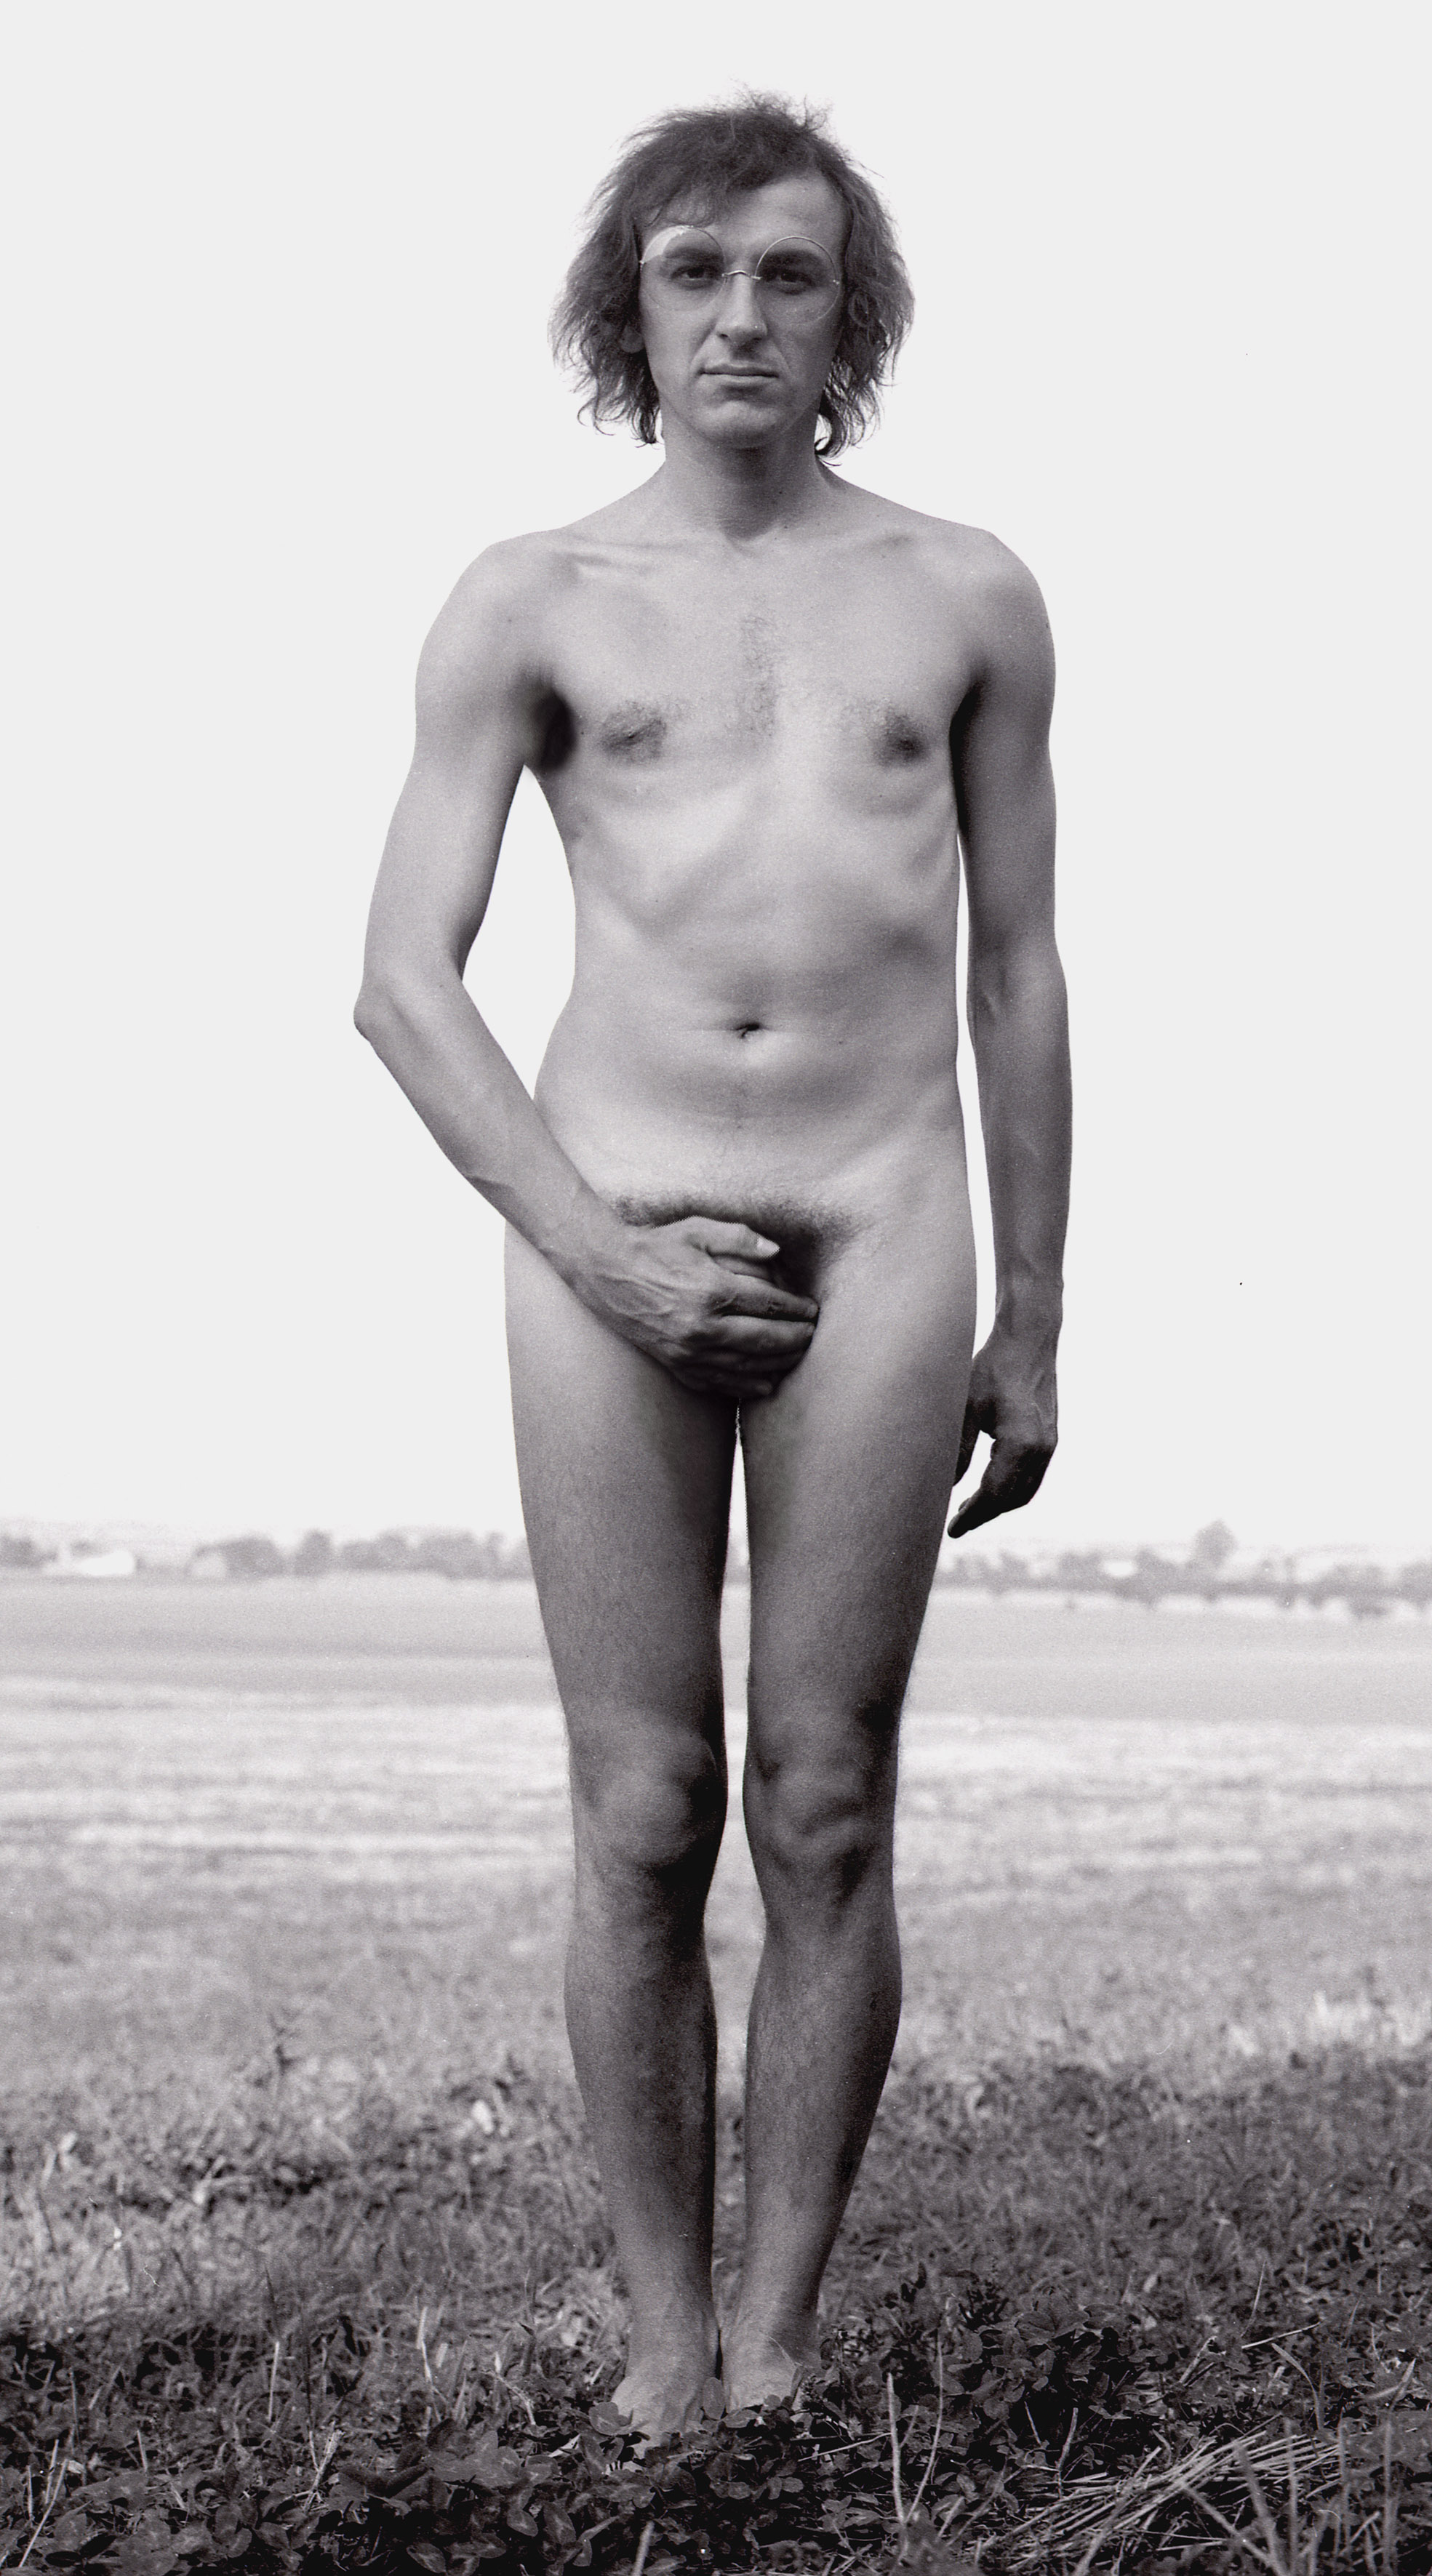 Natalia LL, "Topologia ciała" (1967)